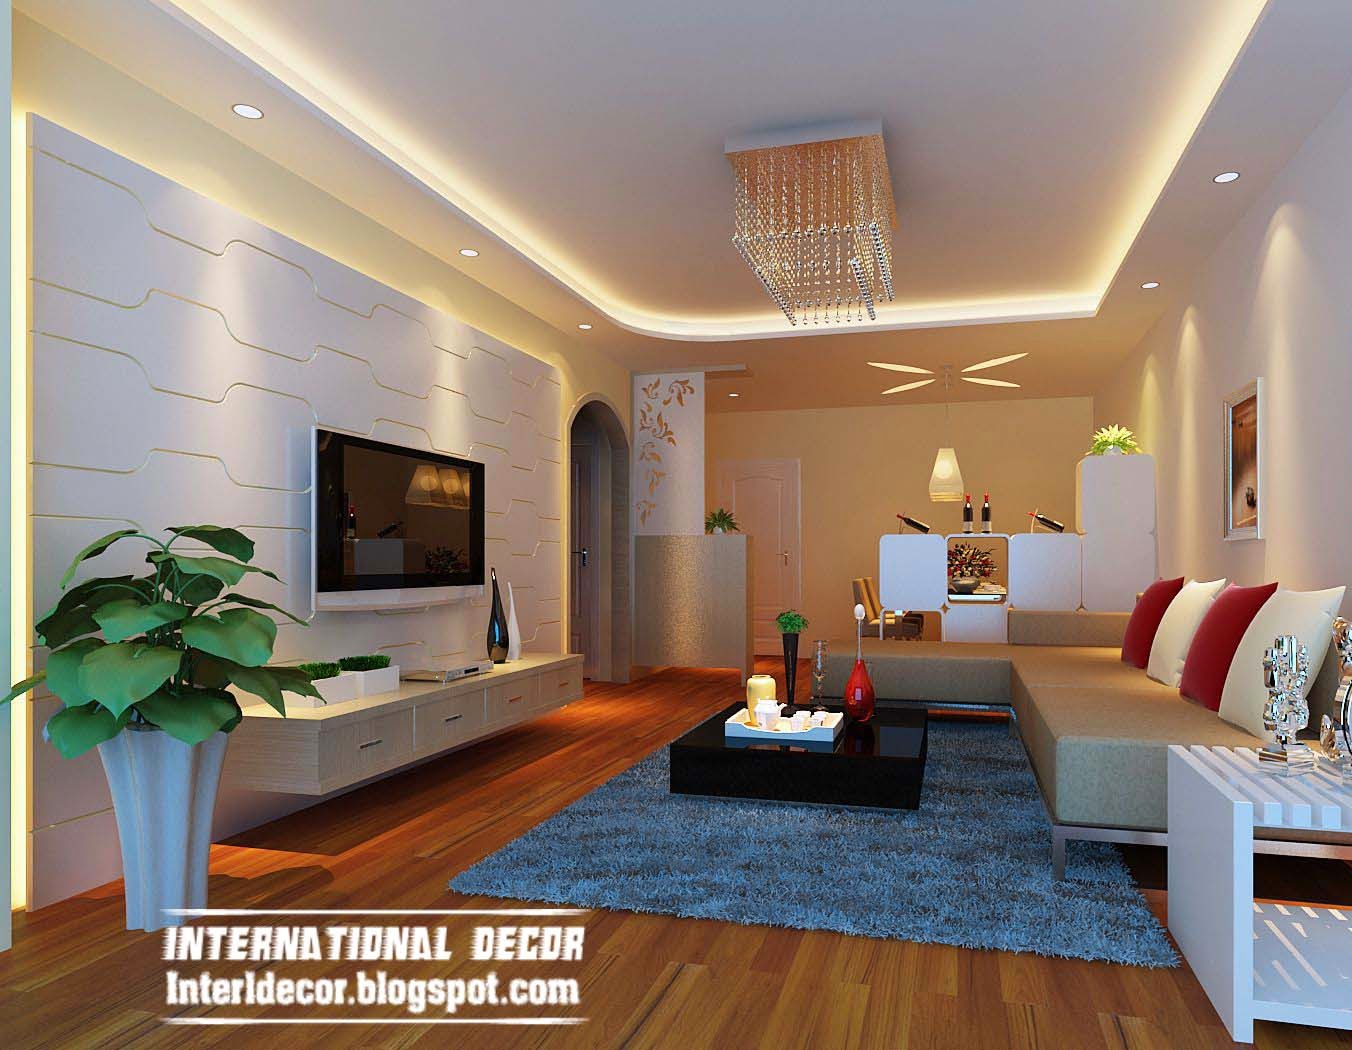 Interior Design 2014: Top 10 Suspended ceiling tiles ...